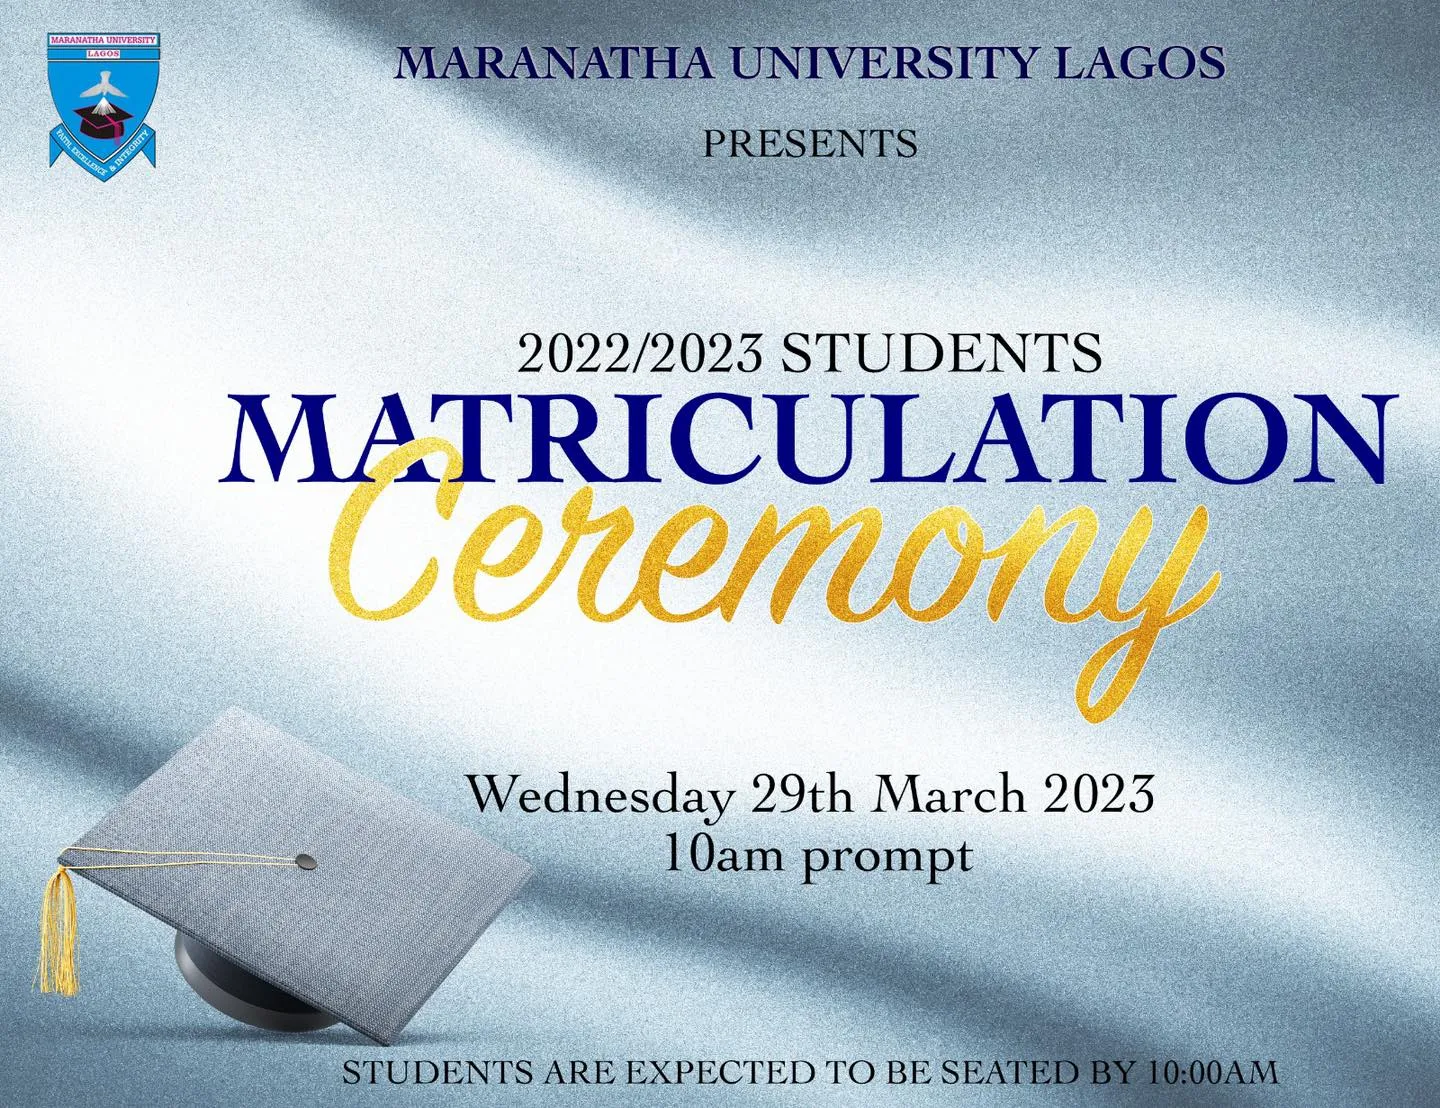 Maranatha University 1st Matriculation Ceremony Date 2022/2023